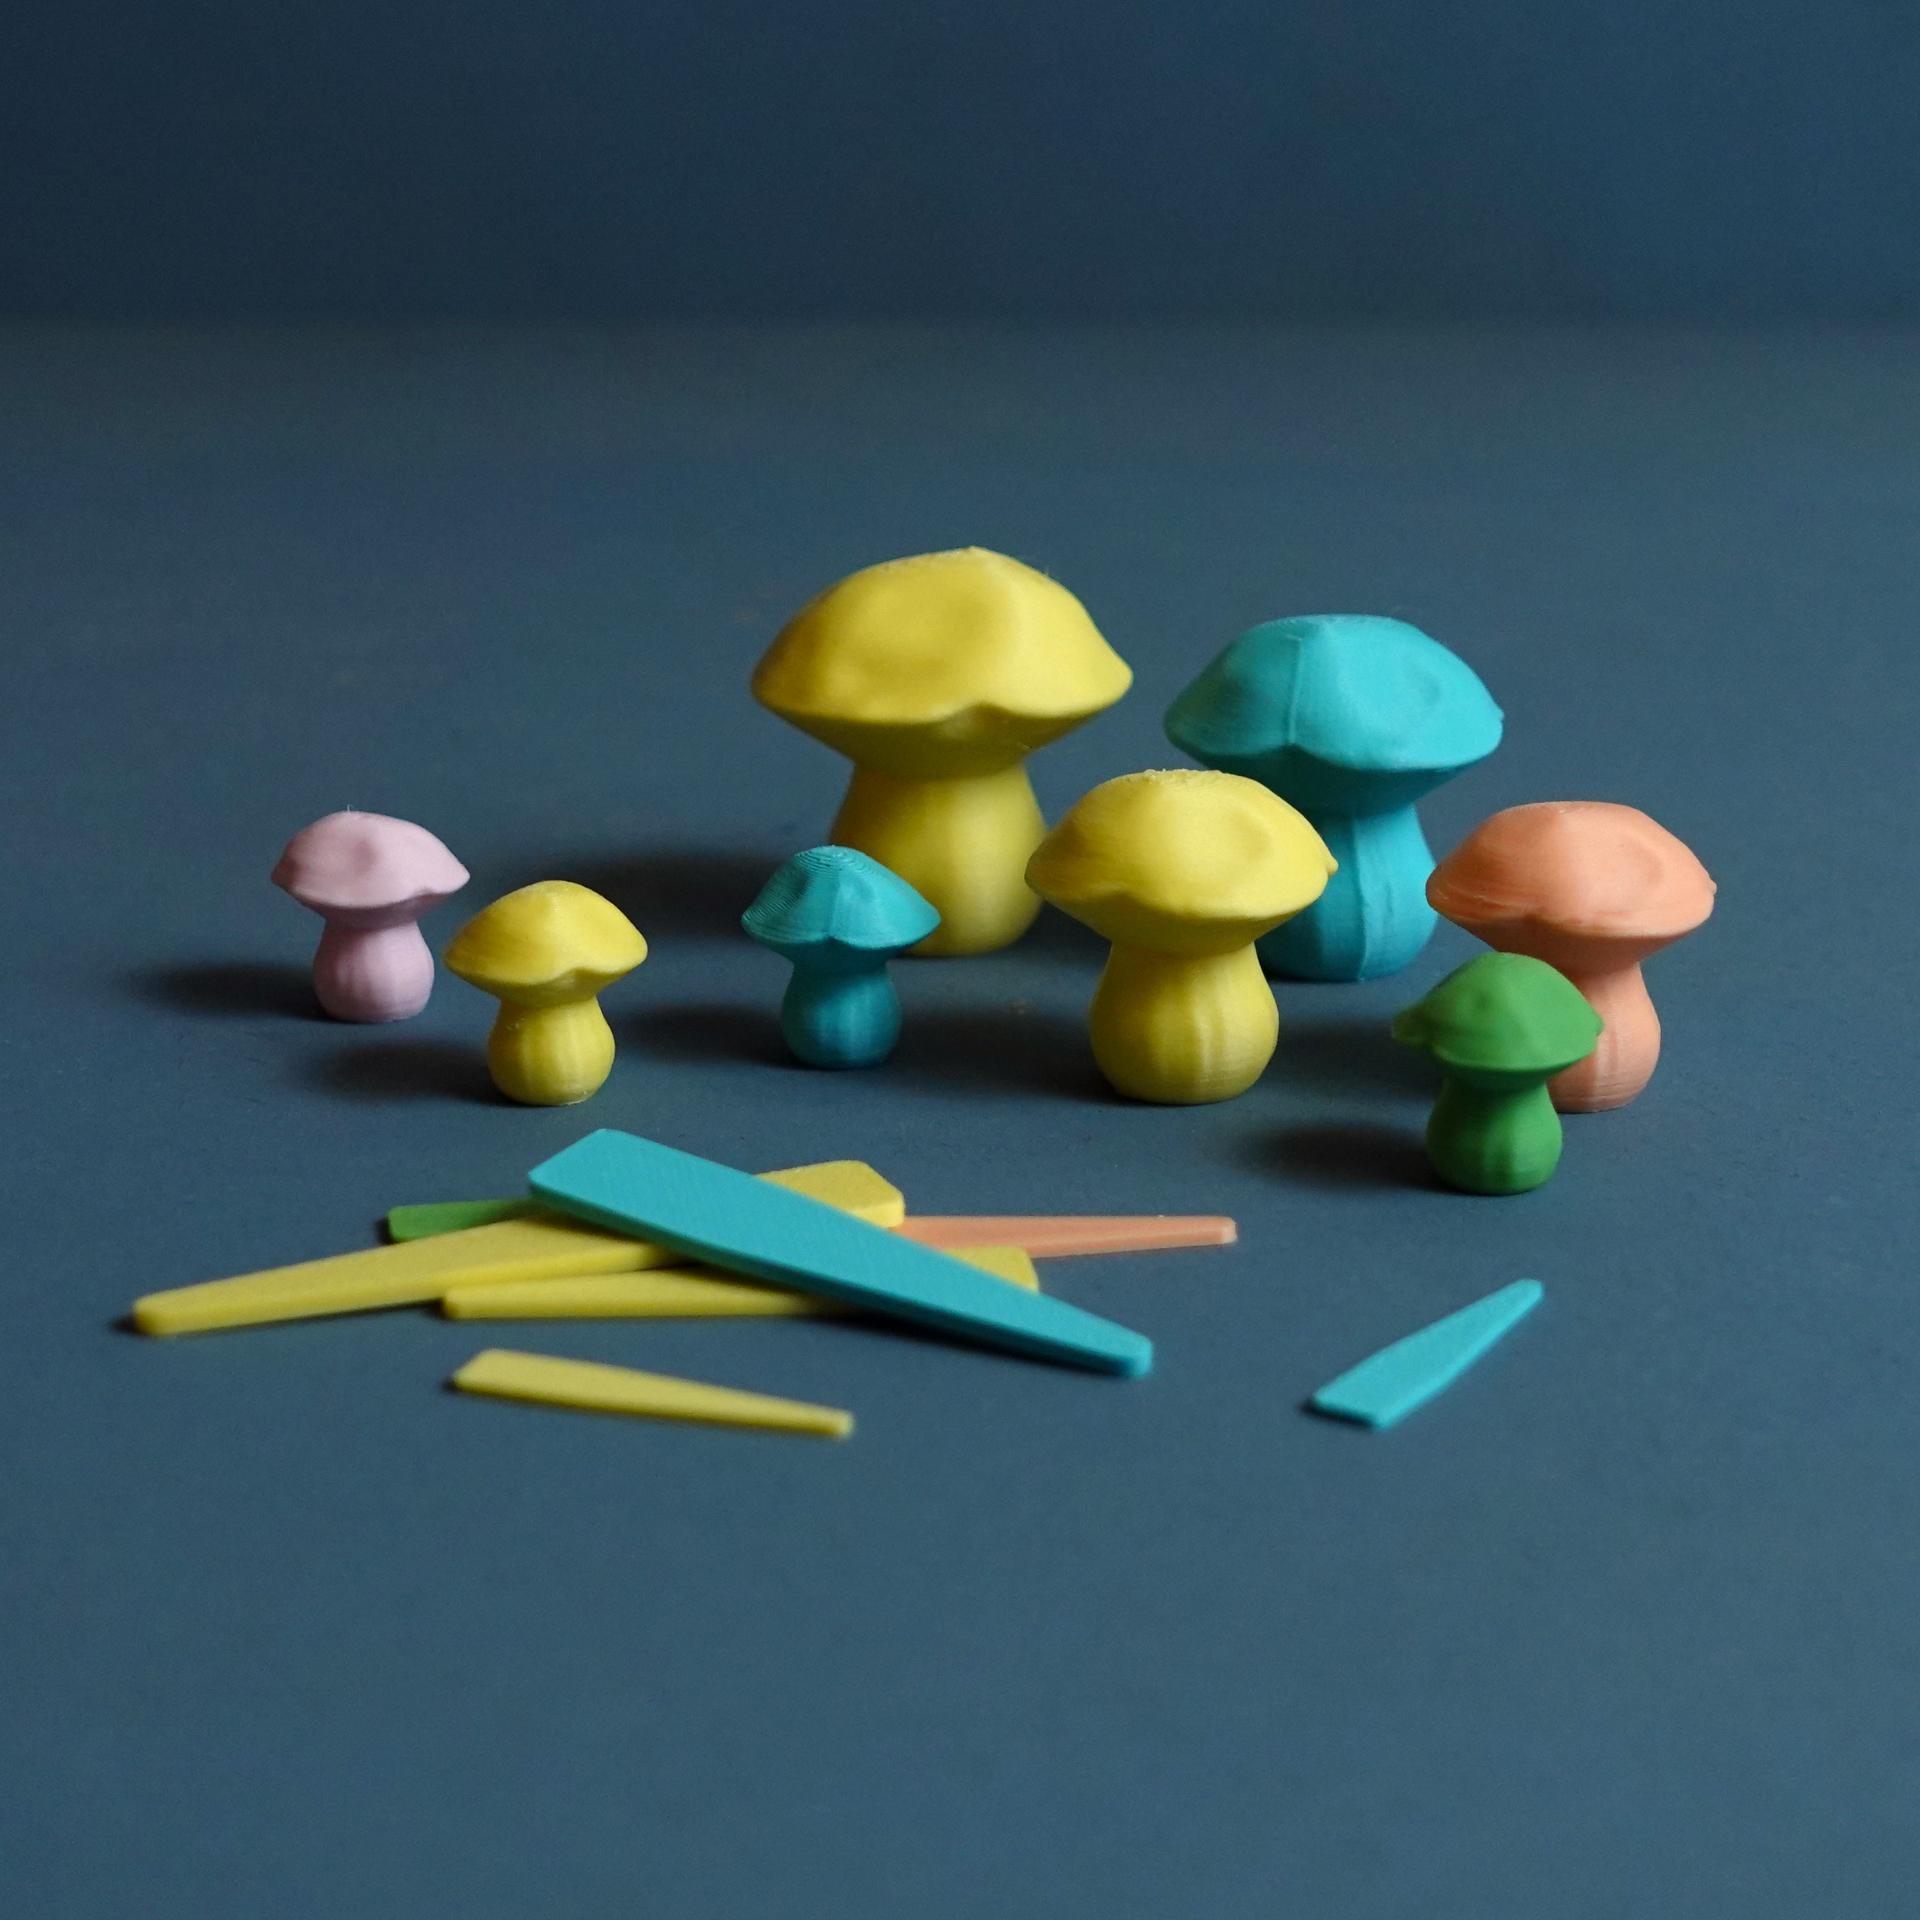 Garden decoration / mushroom ornament “Edulis fungus” 3d model